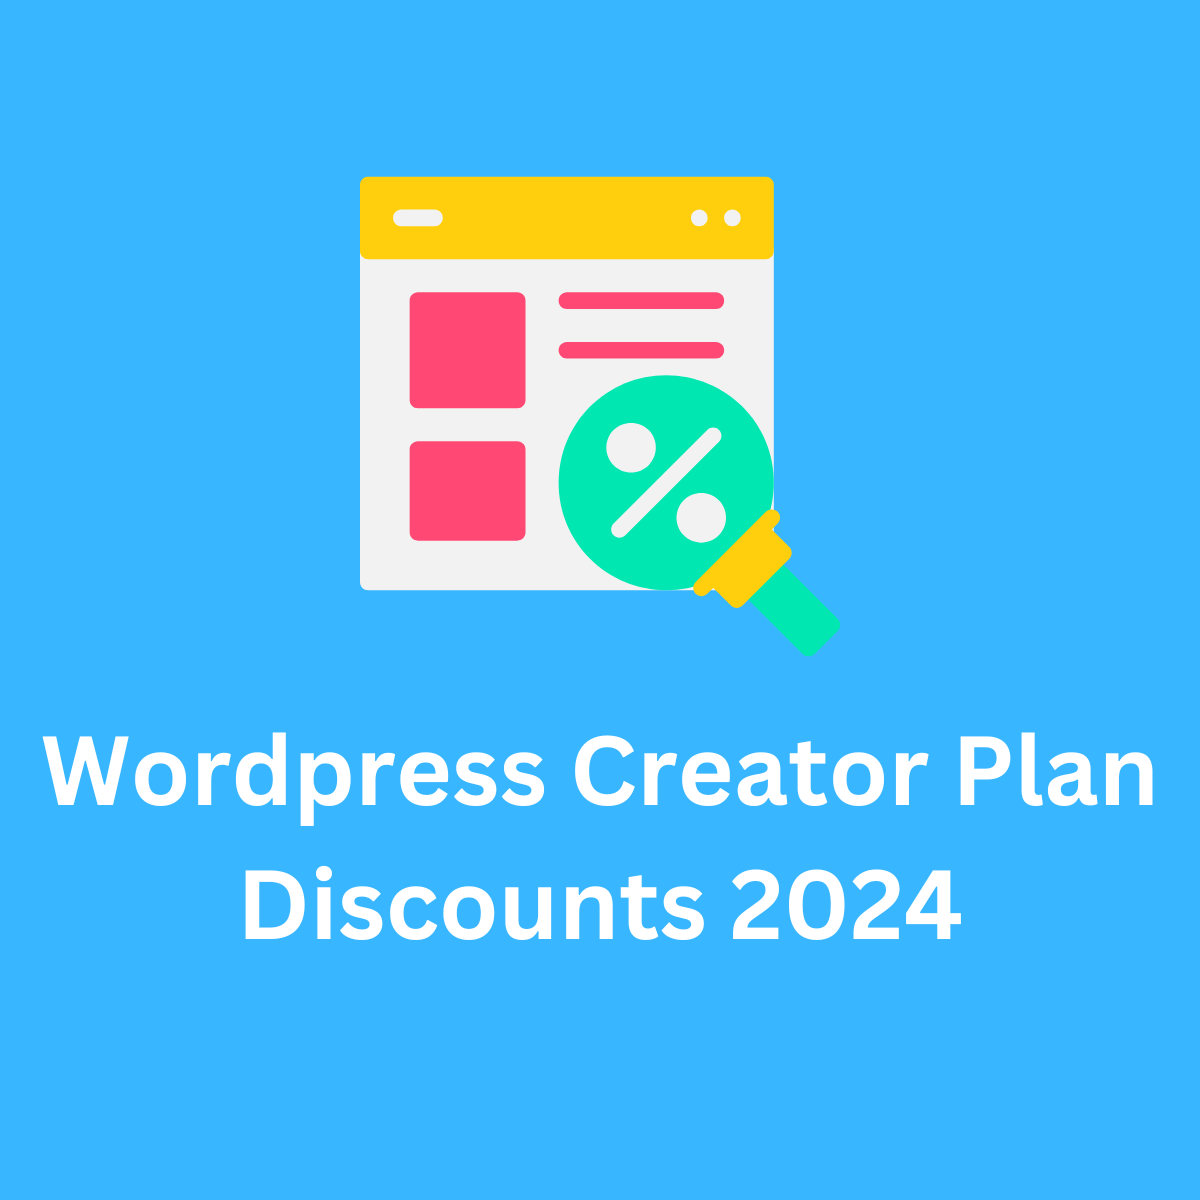 Wordpress Creator Plan Discounts 2024